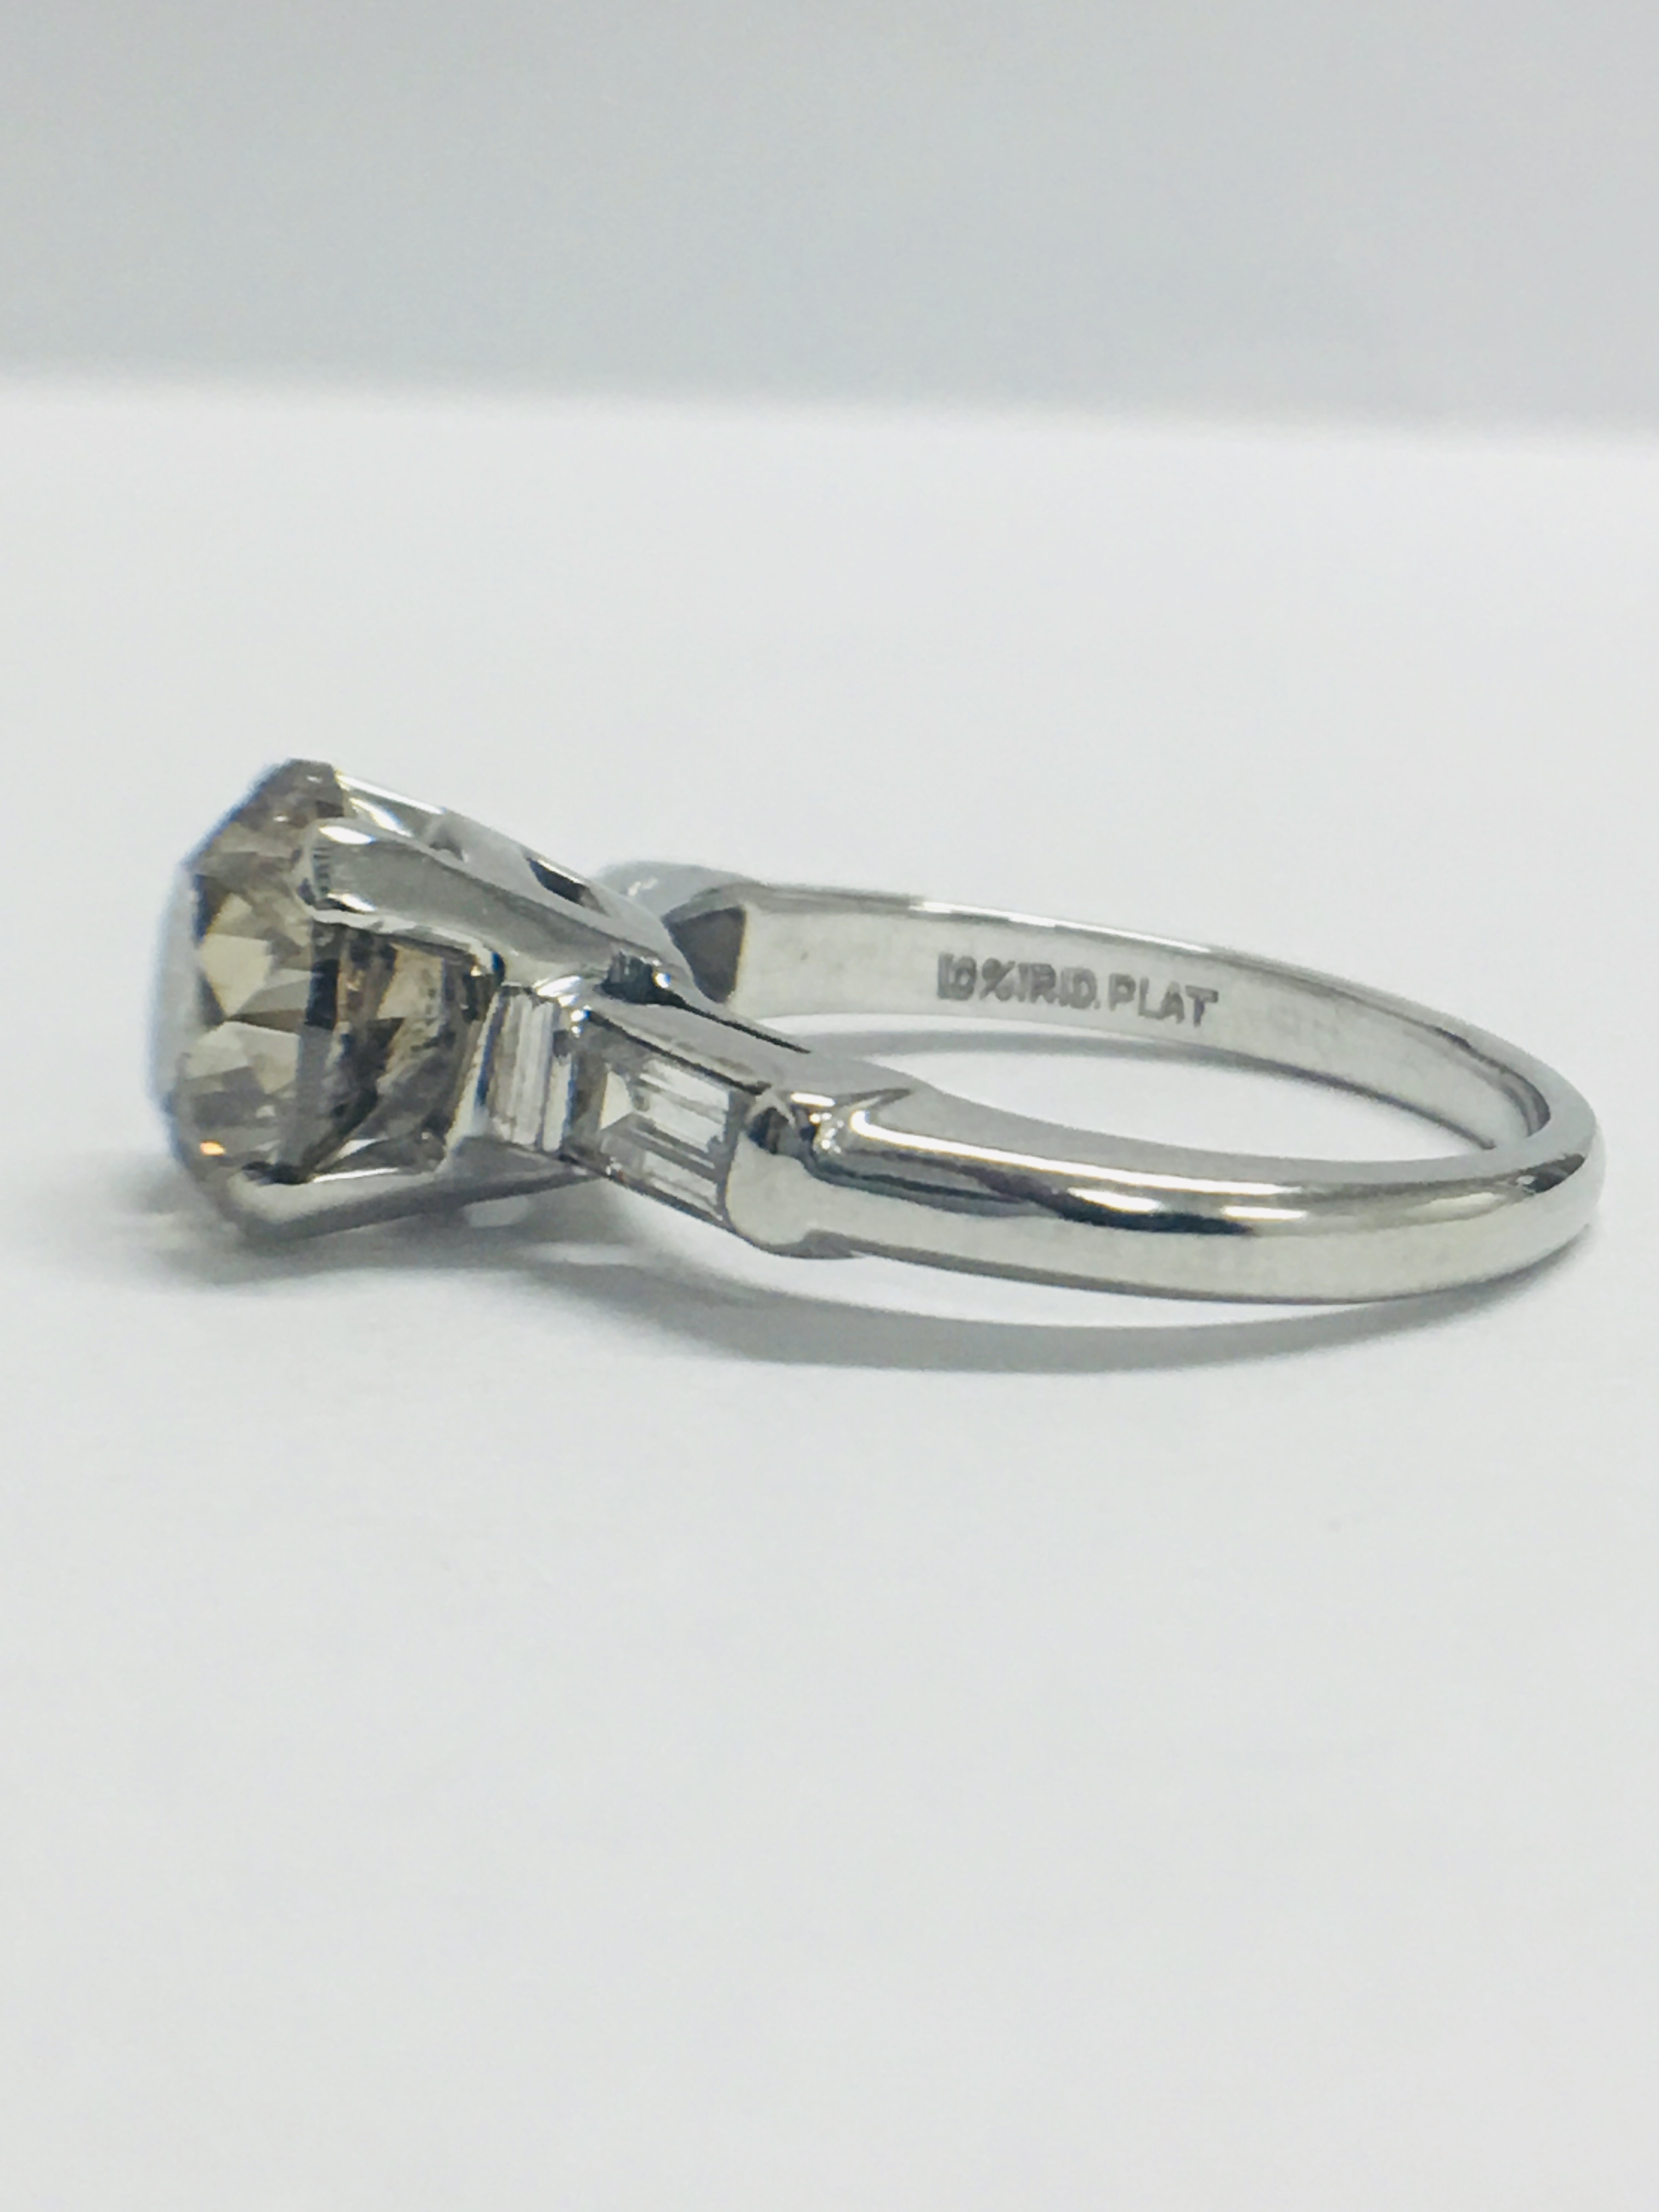 PLATINUM DIAMOND RING - Image 4 of 9